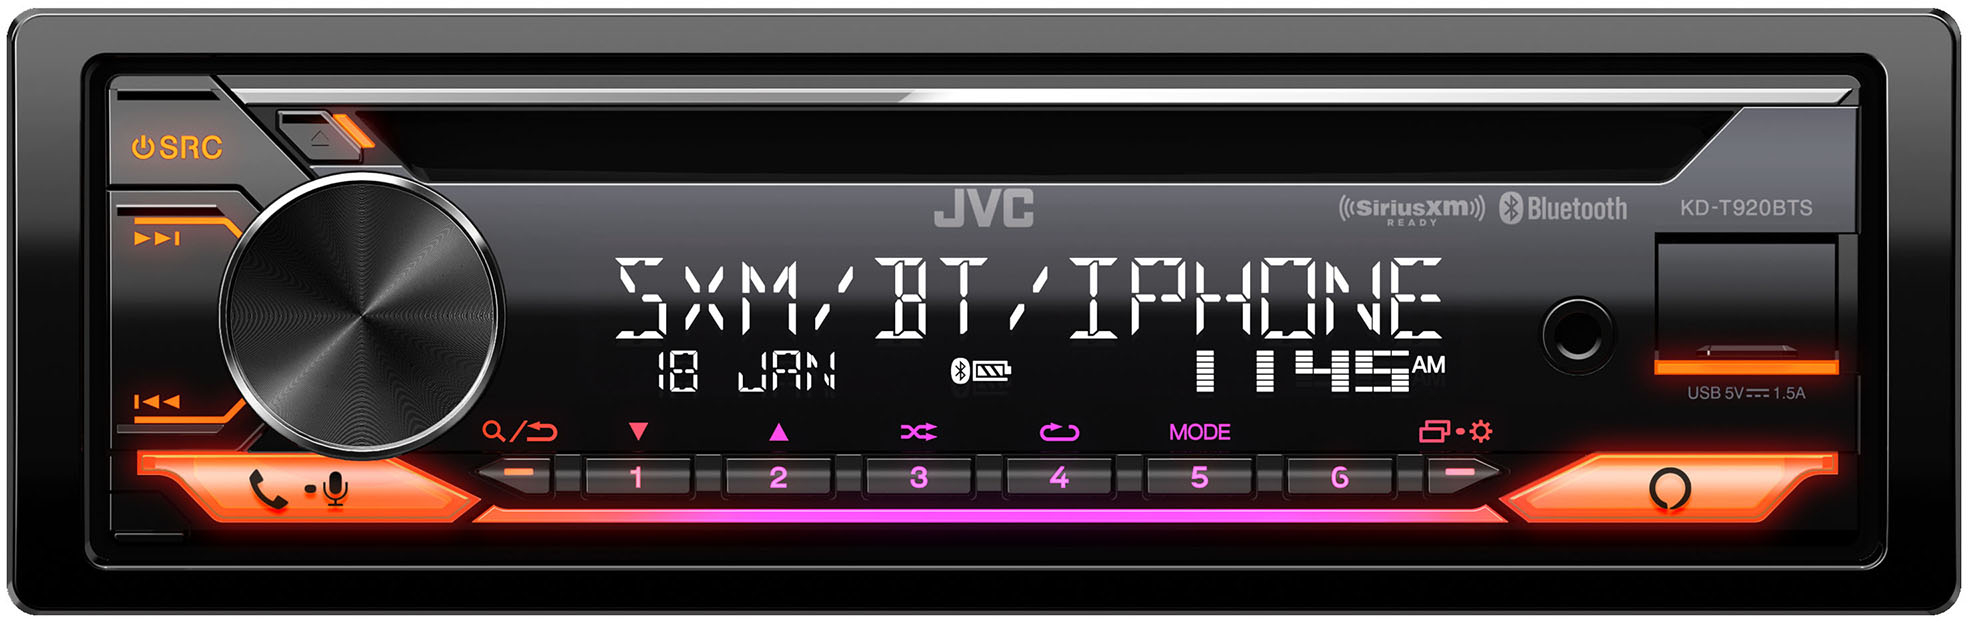 Kleverig Tijdig Onverenigbaar JVC Bluetooth CD Receiver with Alexa Built-In and USB Rapid Charge,  Satellite Rado Ready Black KD-T920BTS - Best Buy